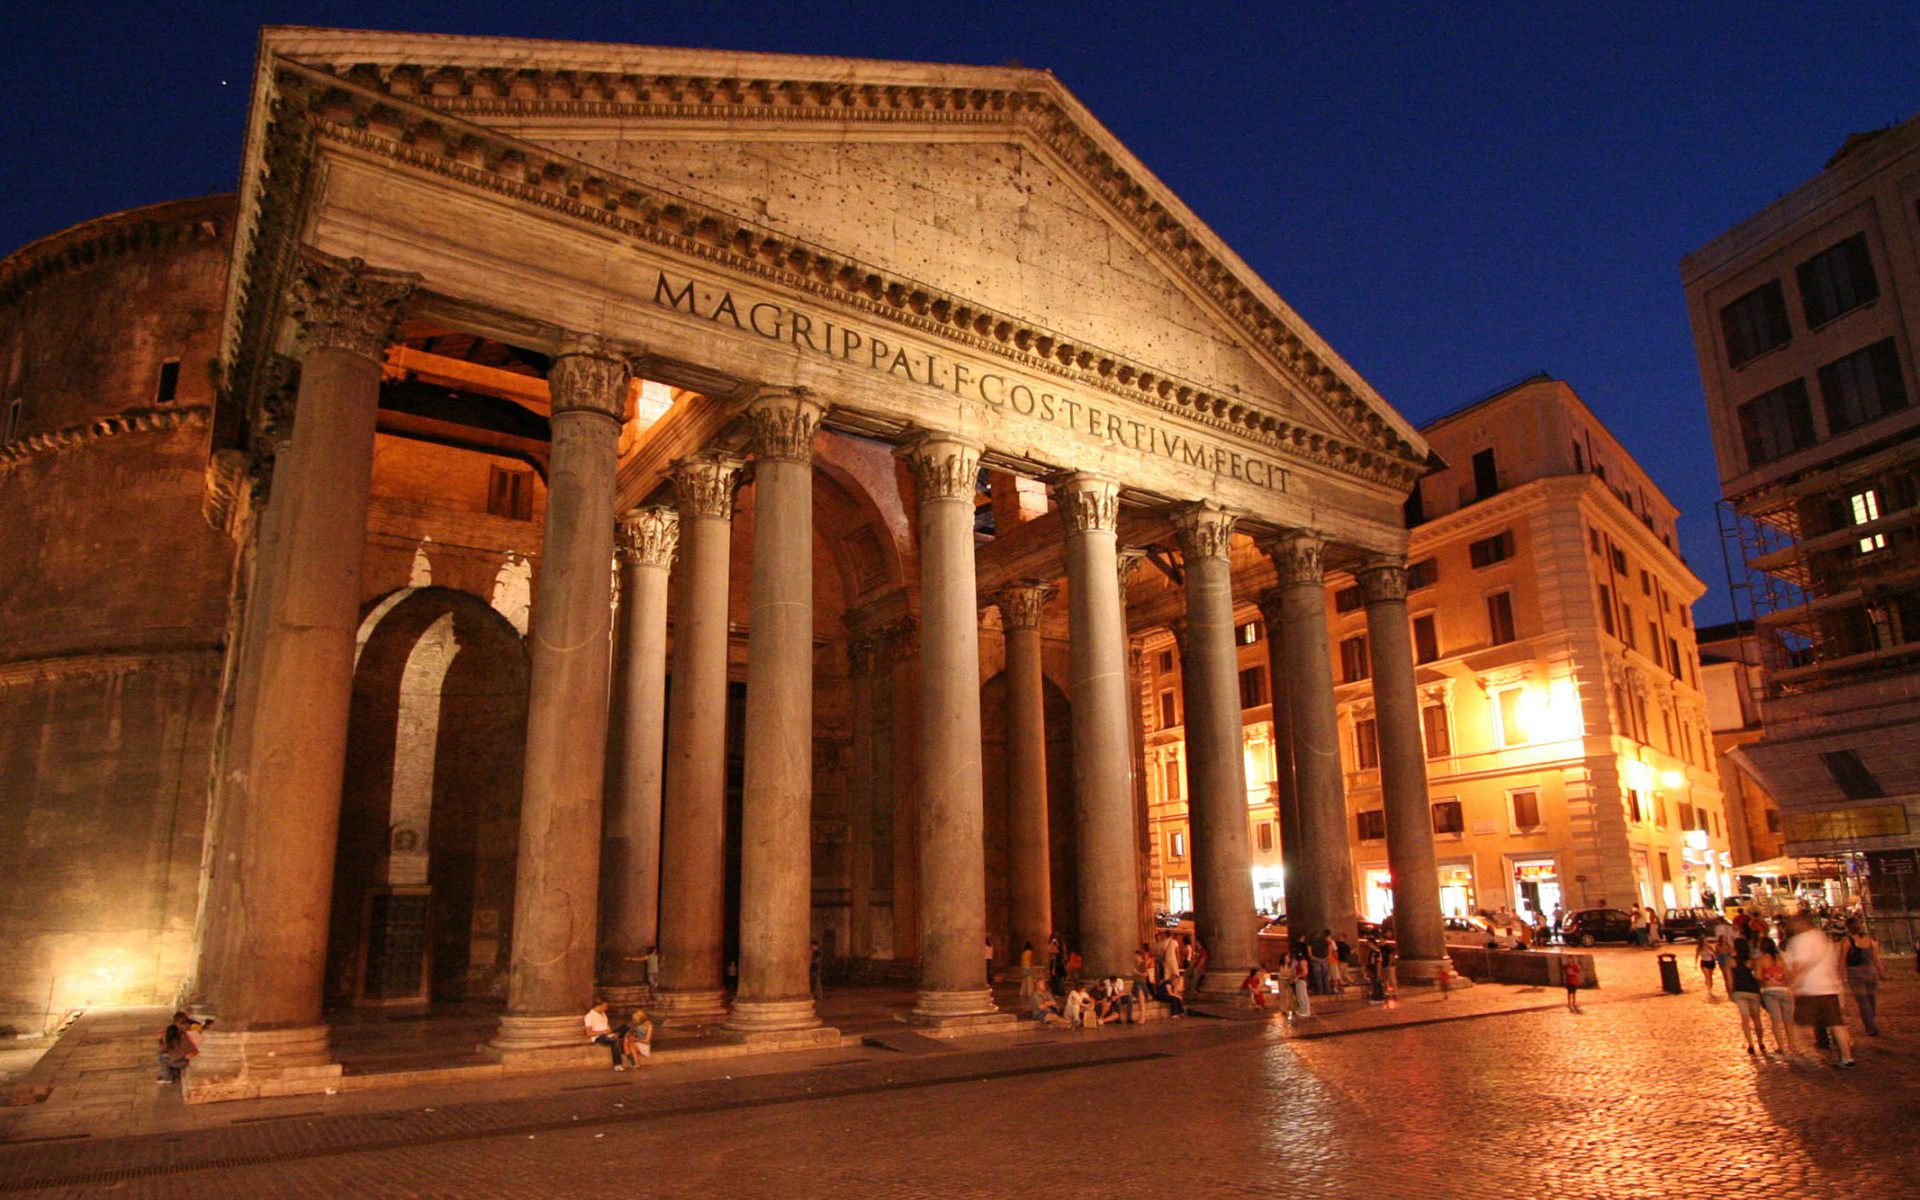 The splendid pantheon at night city tours wallpaper | city wallpaper